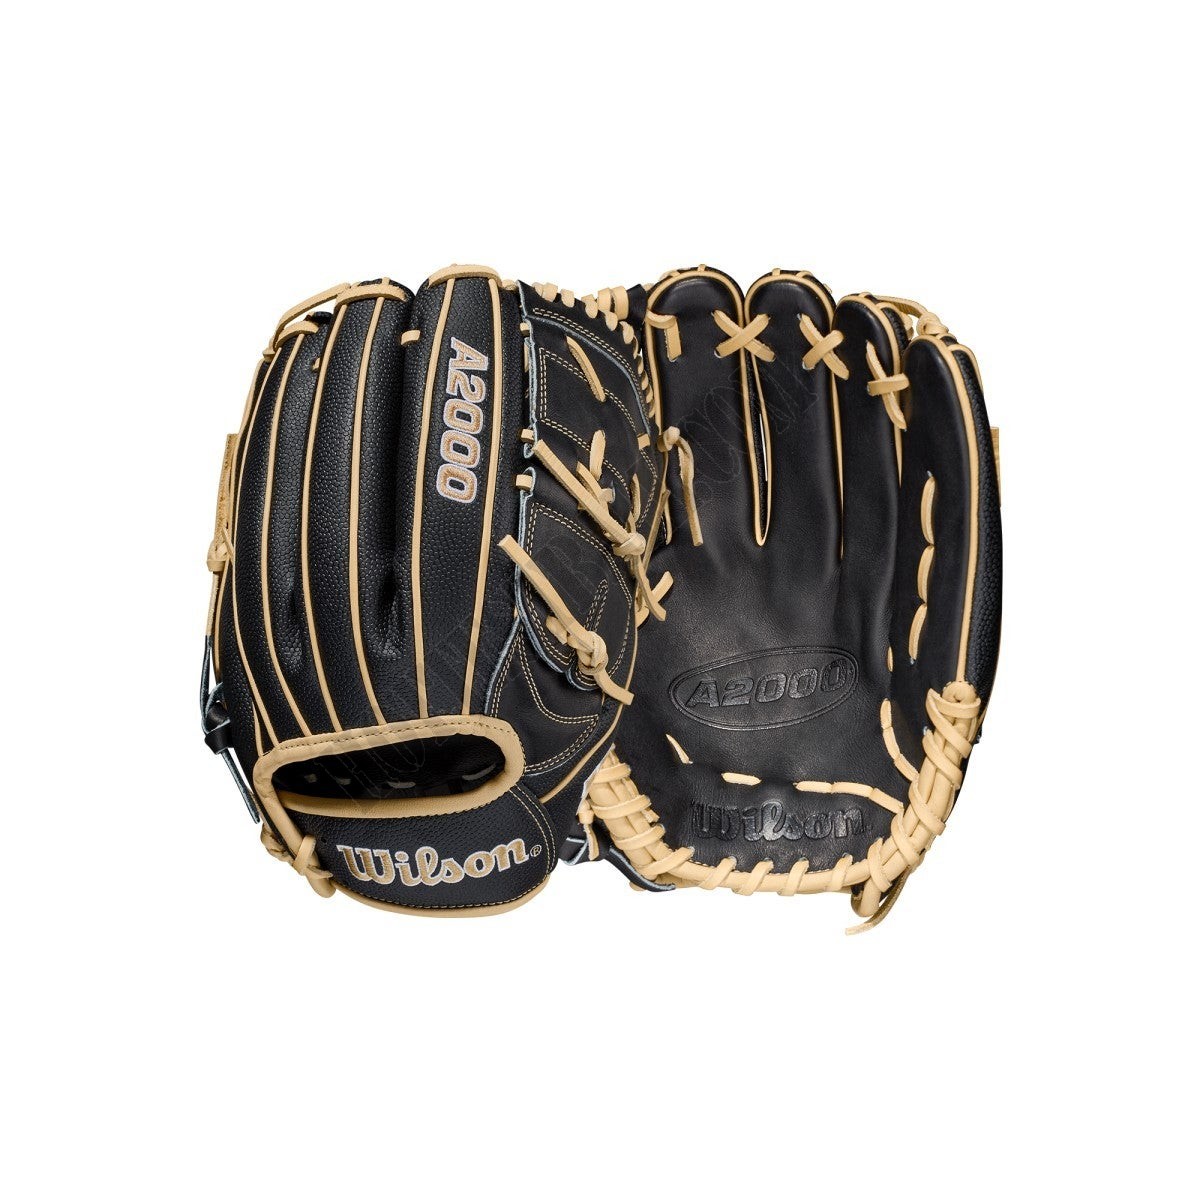 2021 A2000 B2SS 12" Pitcher's Baseball Glove ● Wilson Promotions - -0